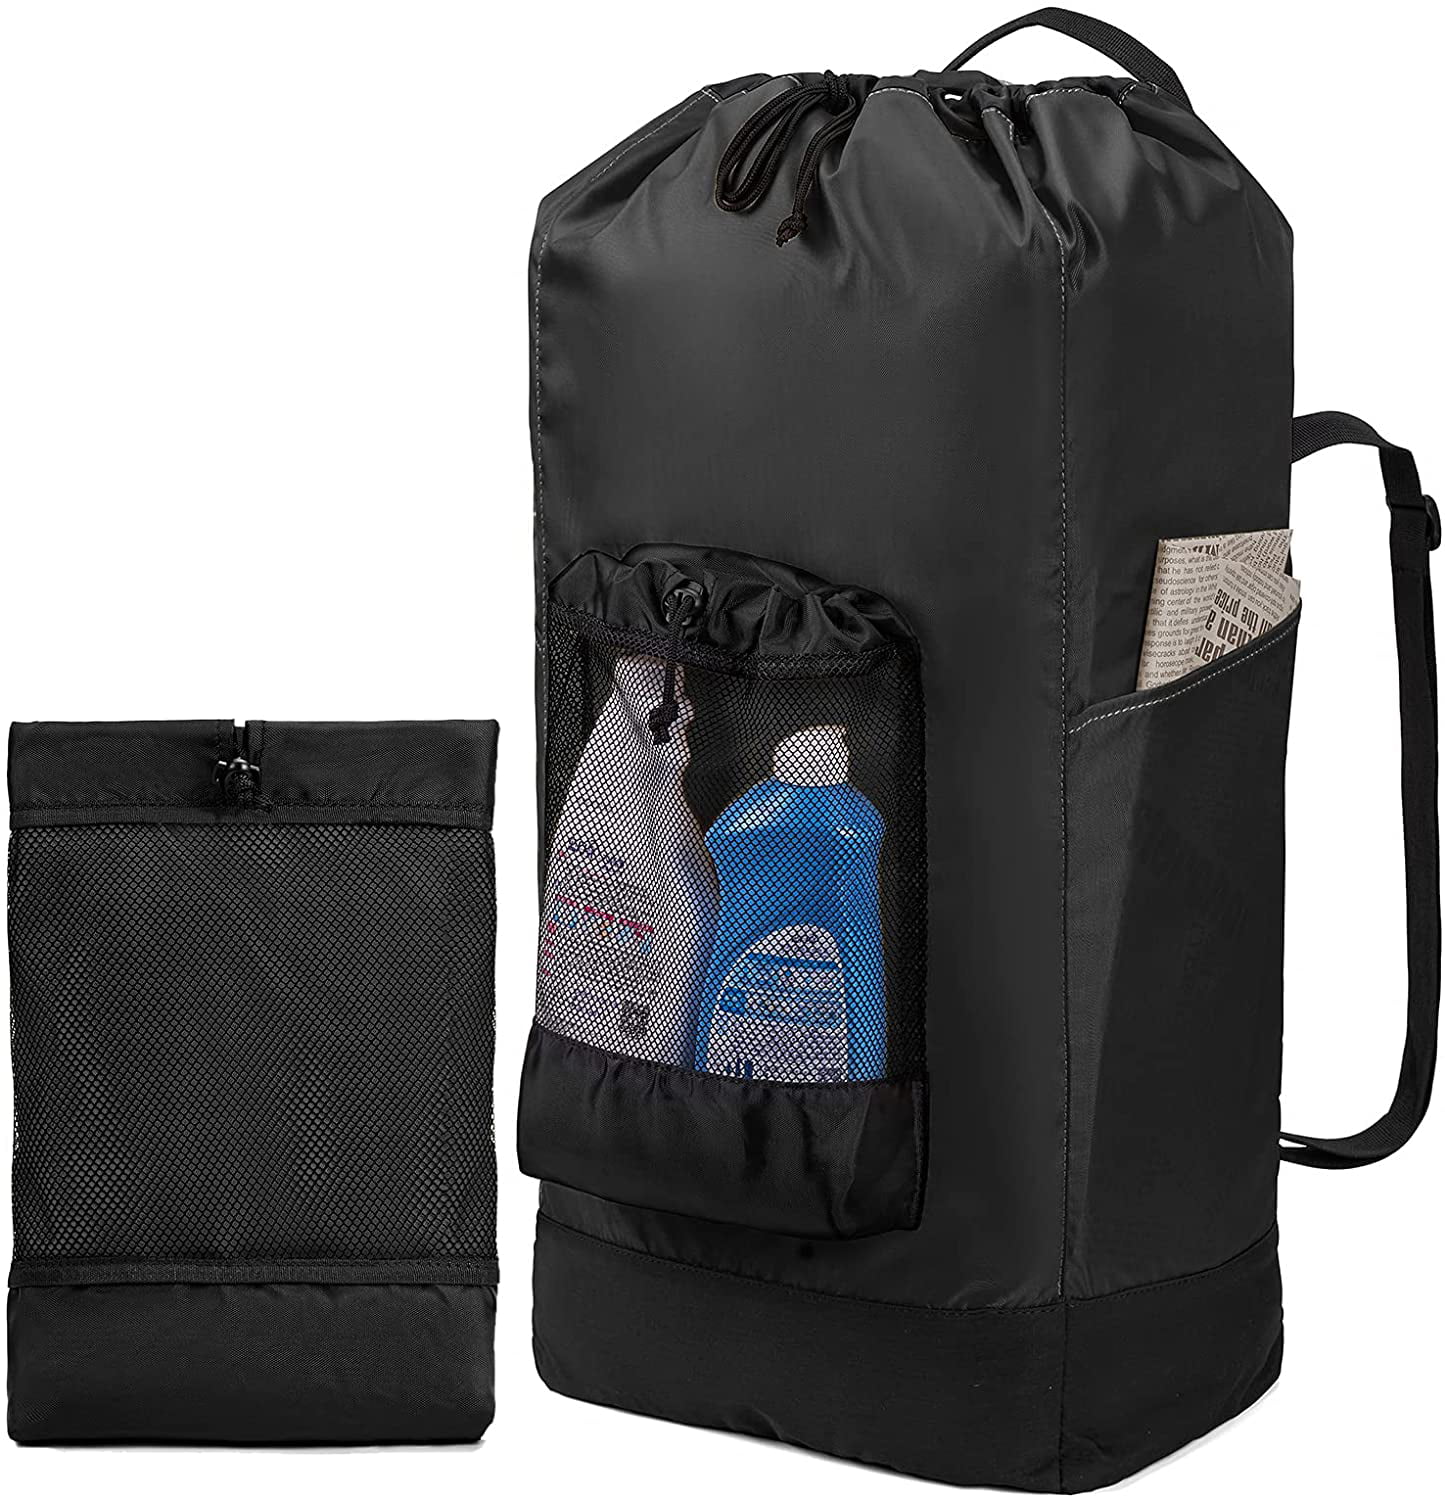 KALIDI Laundry Backpack 60L Foldable Laundry Bag with Shoulder Straps Mesh Pocket 600D Durable Nylon Washing Backpack Drawstring Closure for College Dorm Laundromat Apartment Travel Camp 